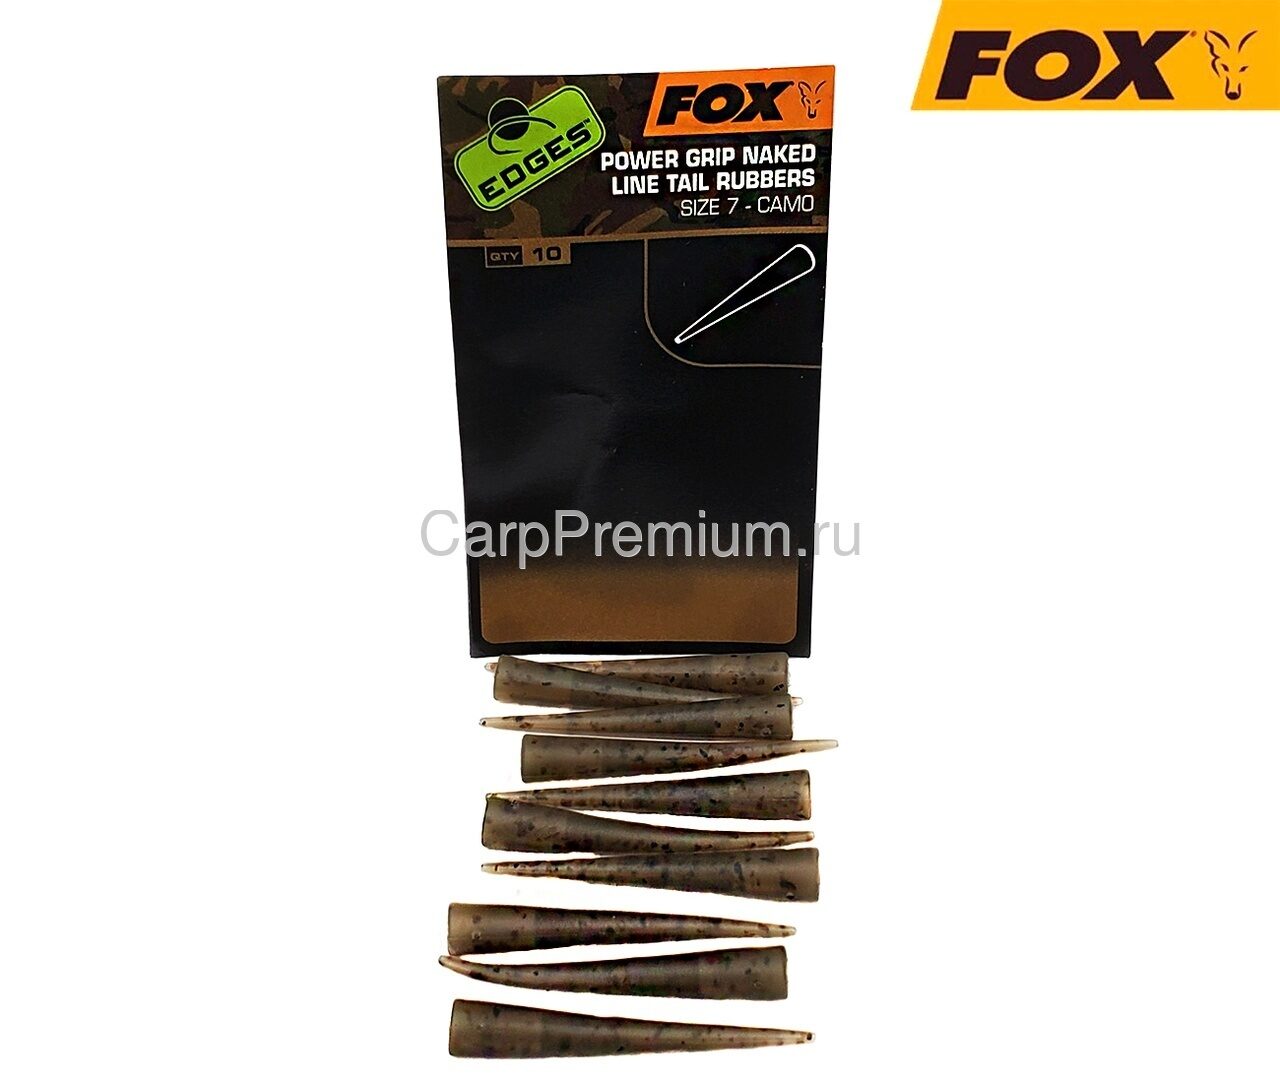 Конуса резиновые для клипсы Камуфляжные Fox (Фокс) - Edges Camo Power Grip Naked Tail Rubber, Размер 7, 10 шт